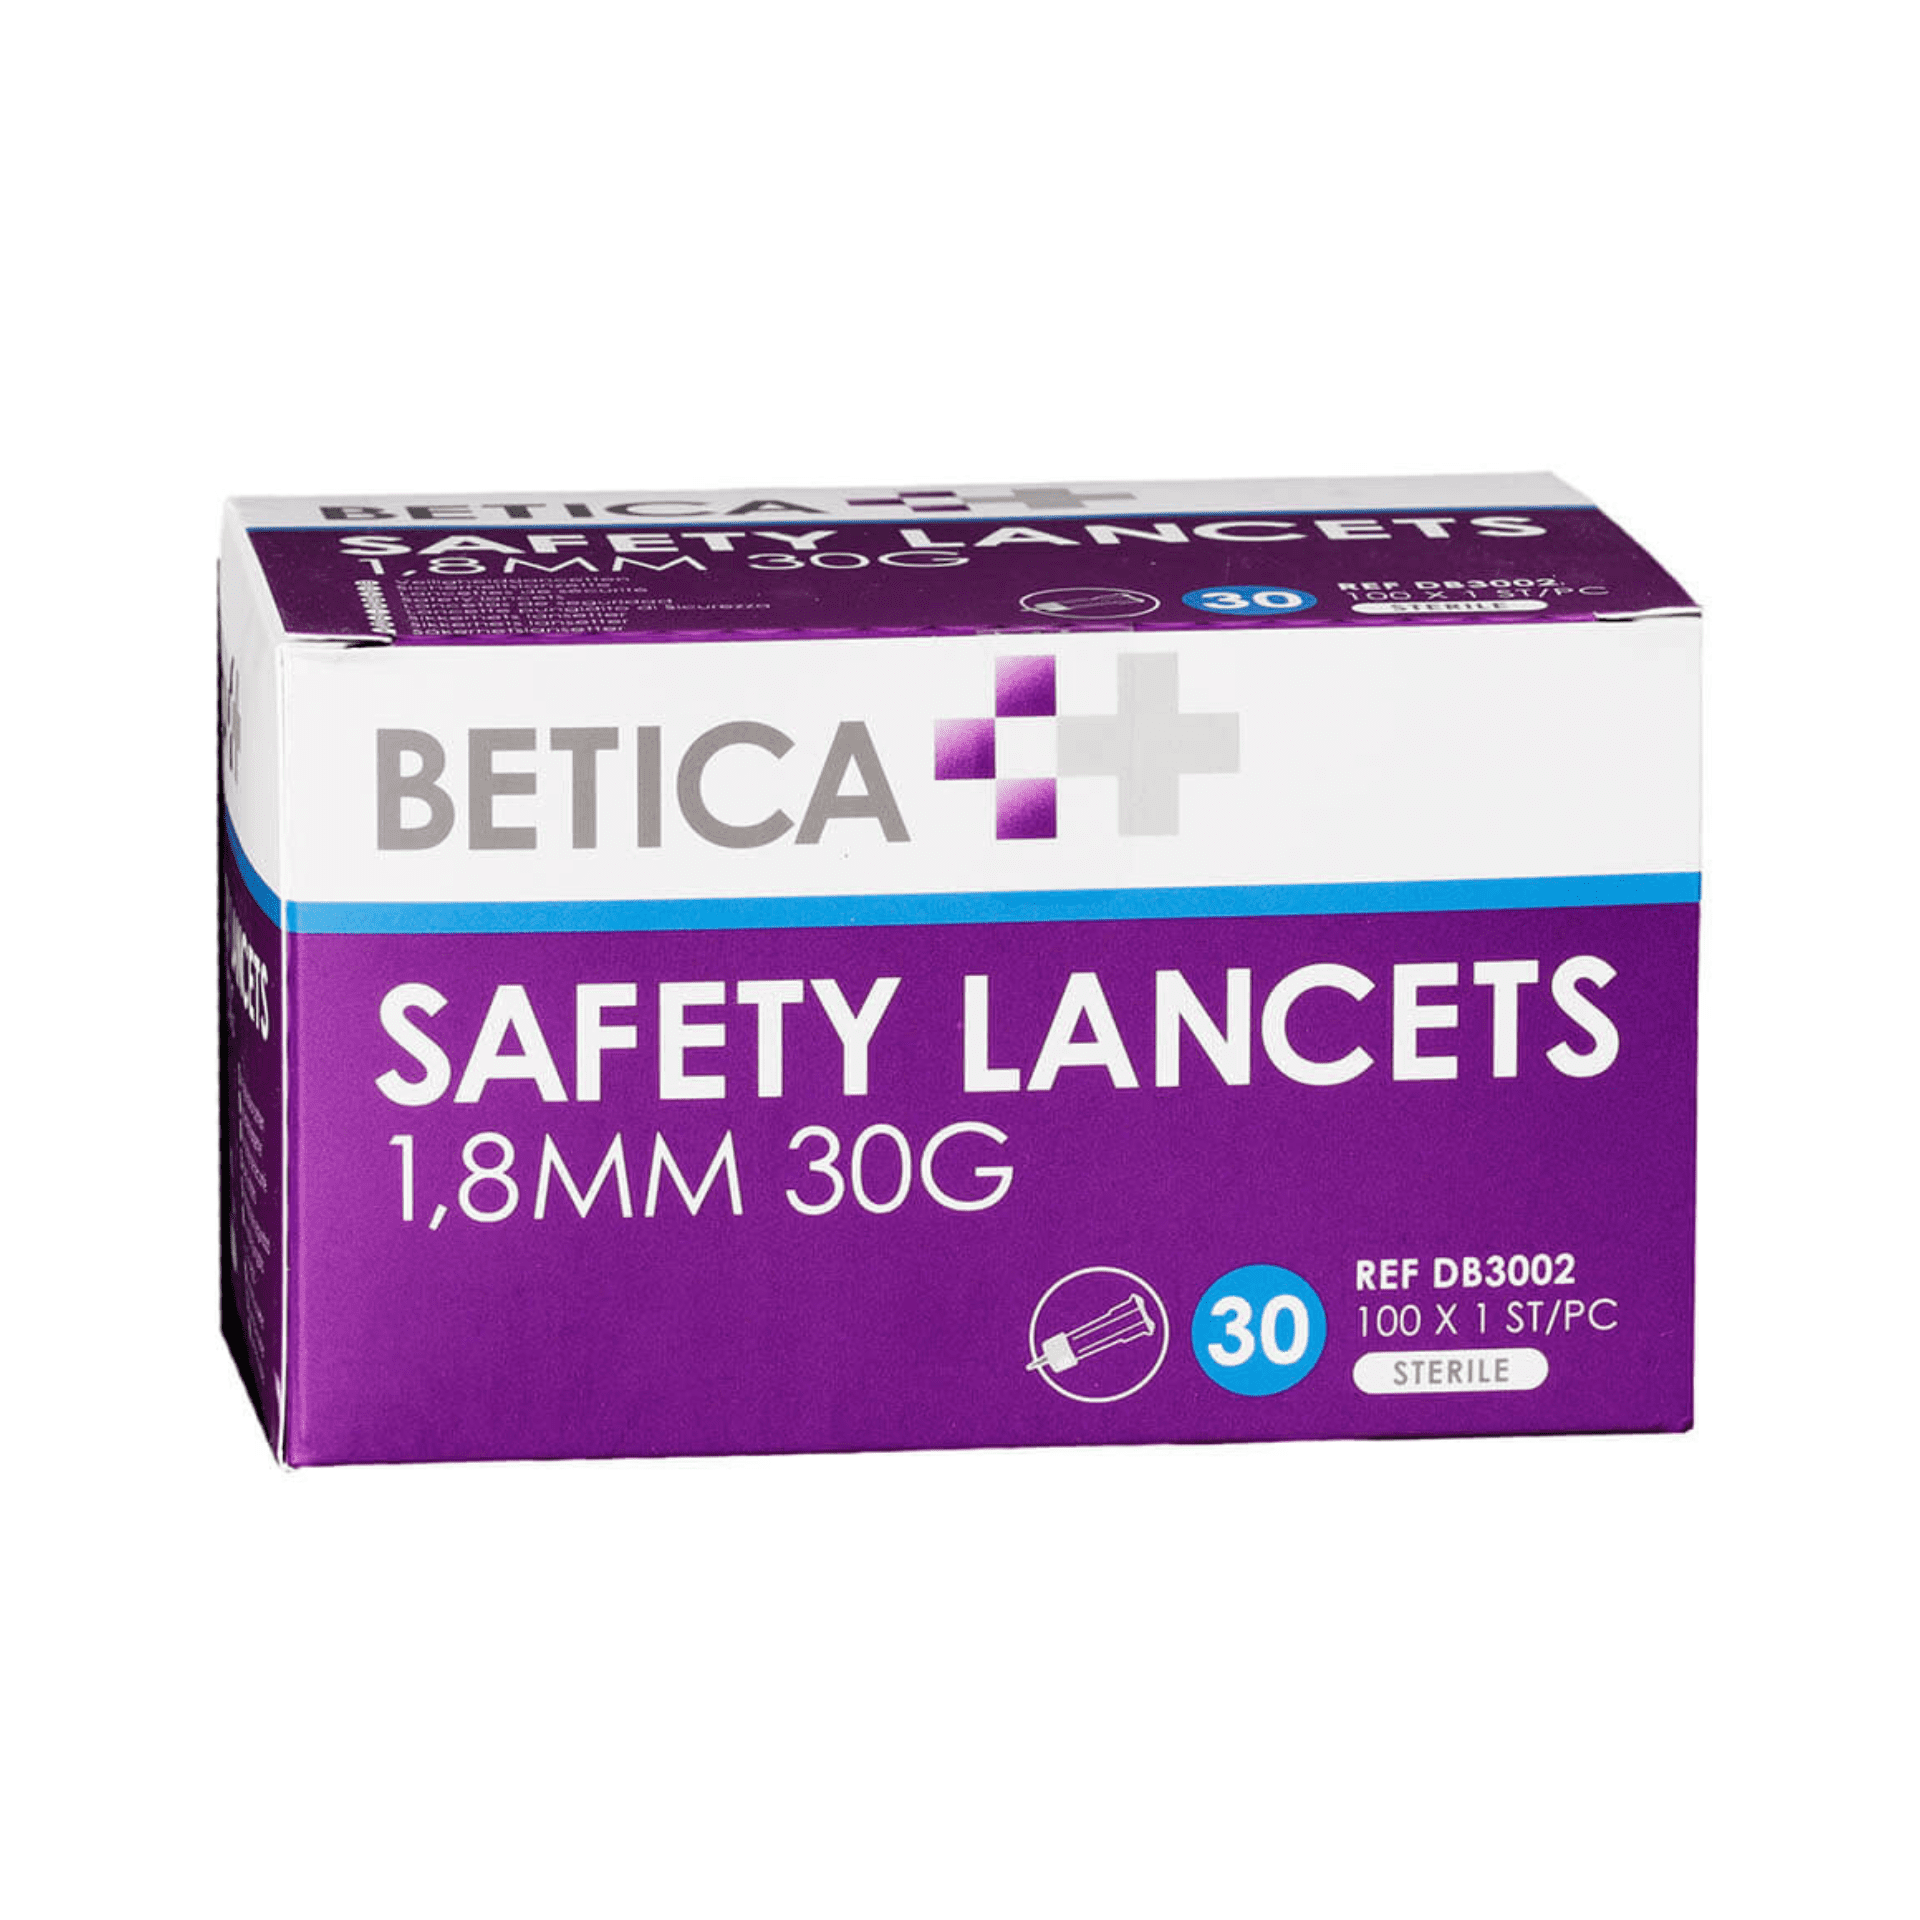 Betica Safety Lancet 1,8mm 30g 100